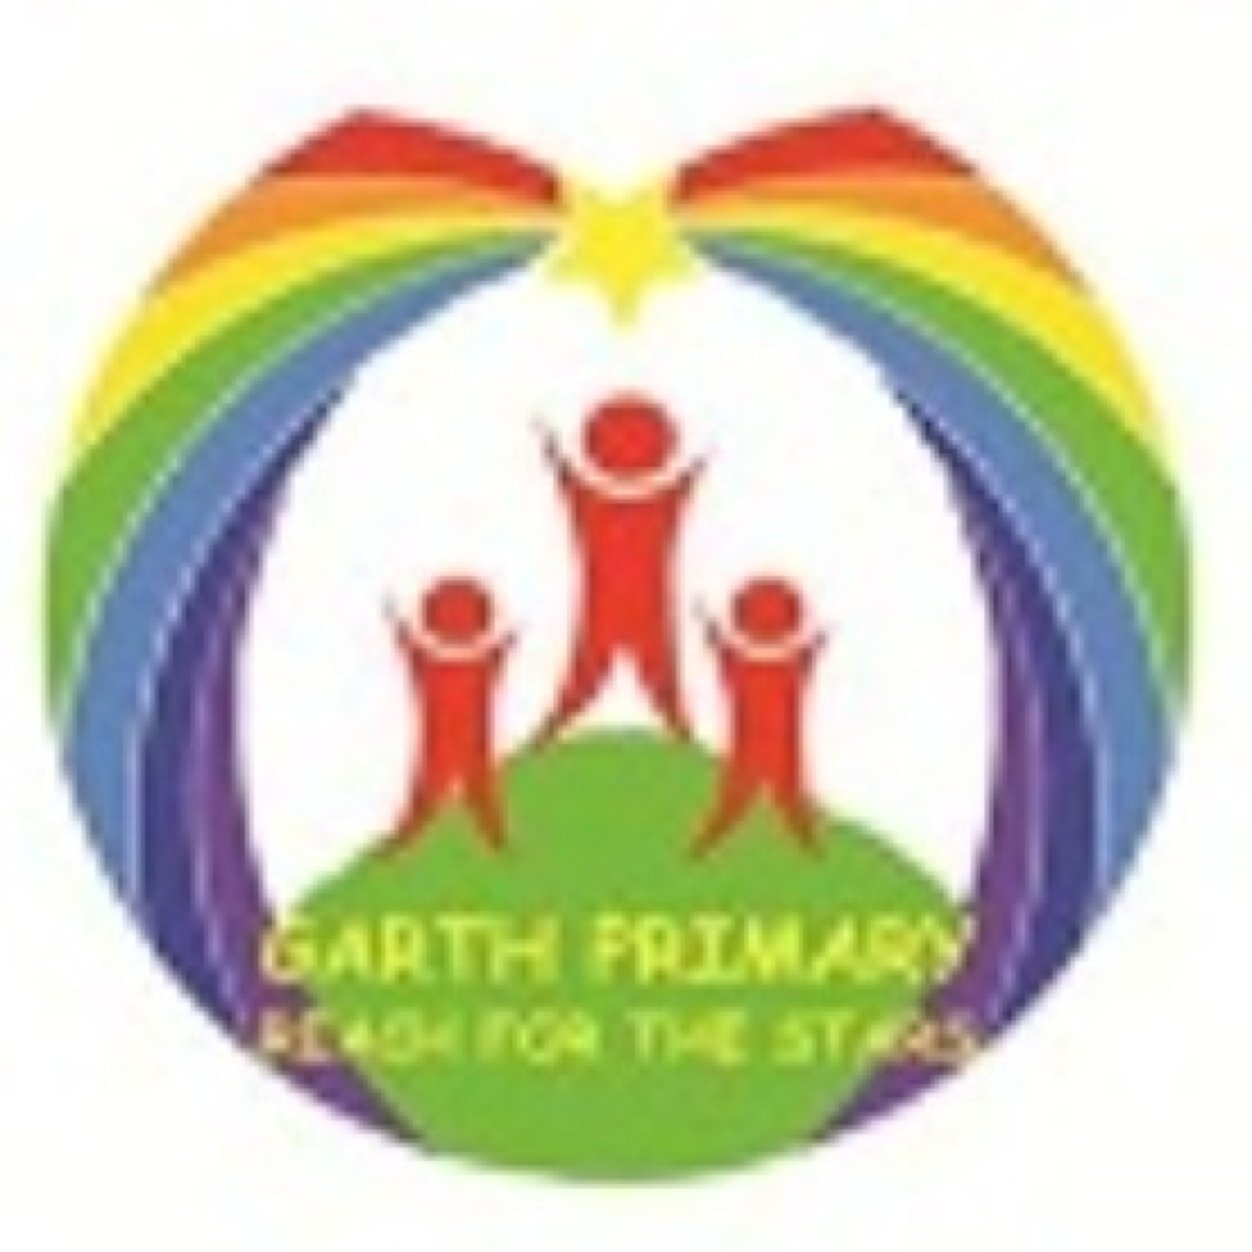 Garth Primary School